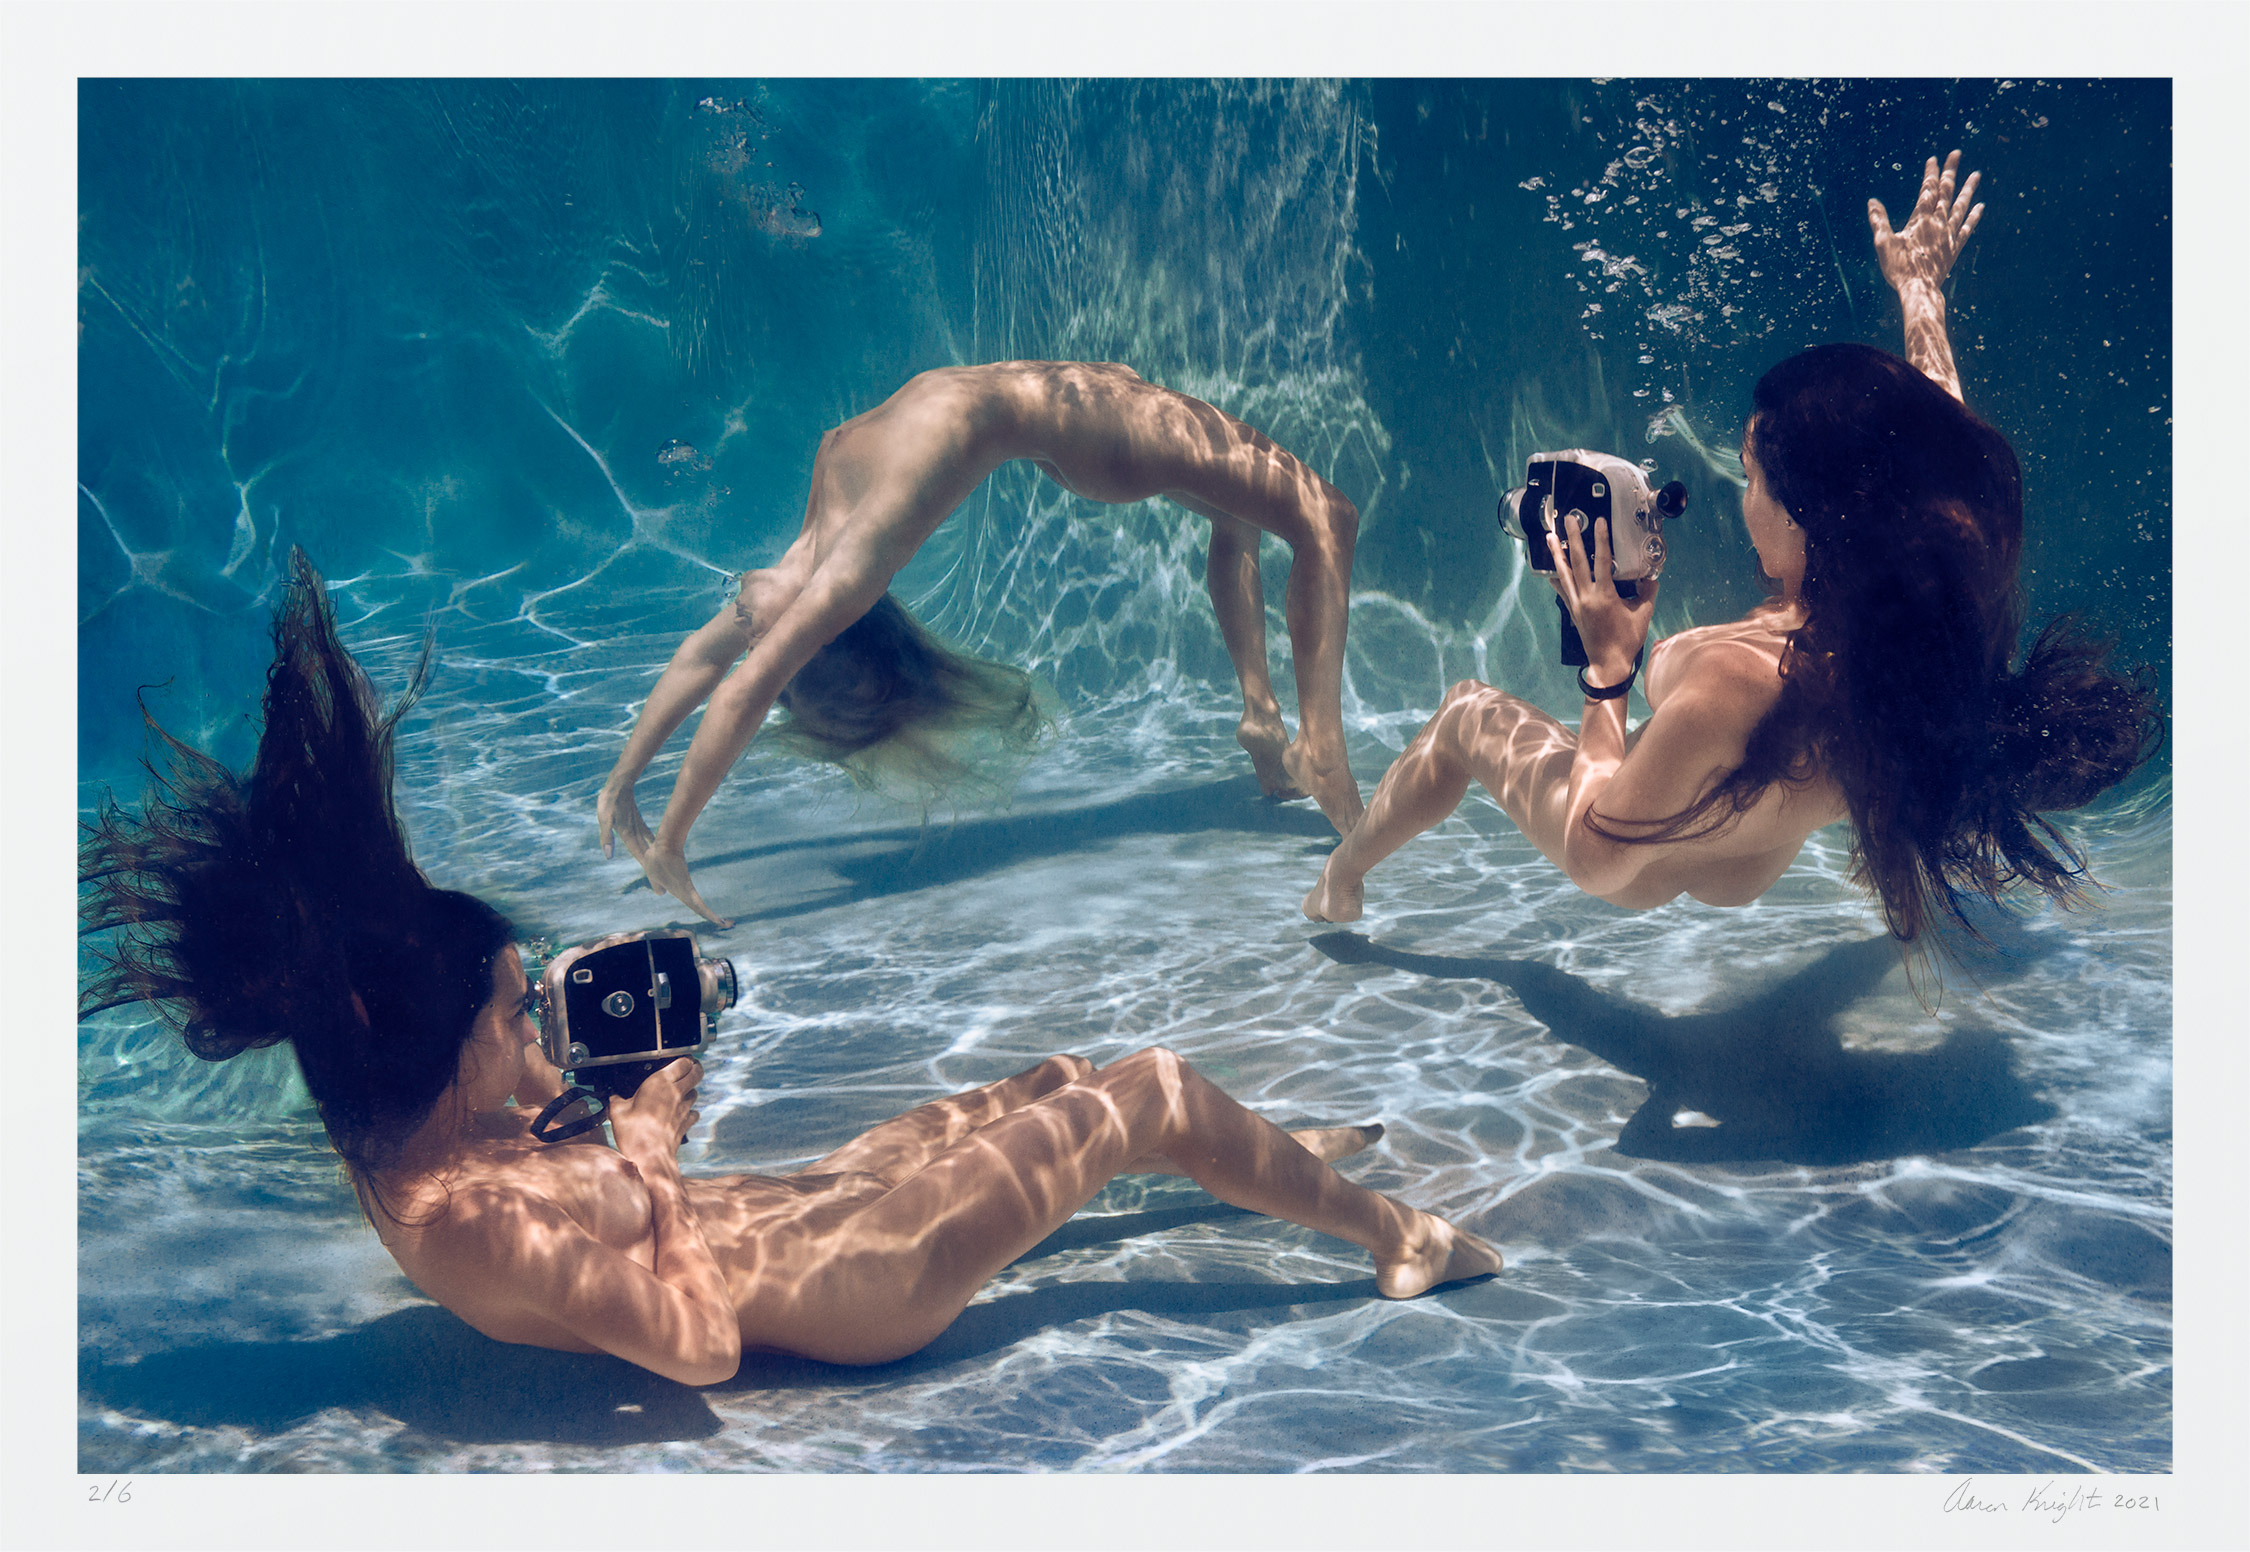 Original art photography, underwater nudes by Aaron Knight